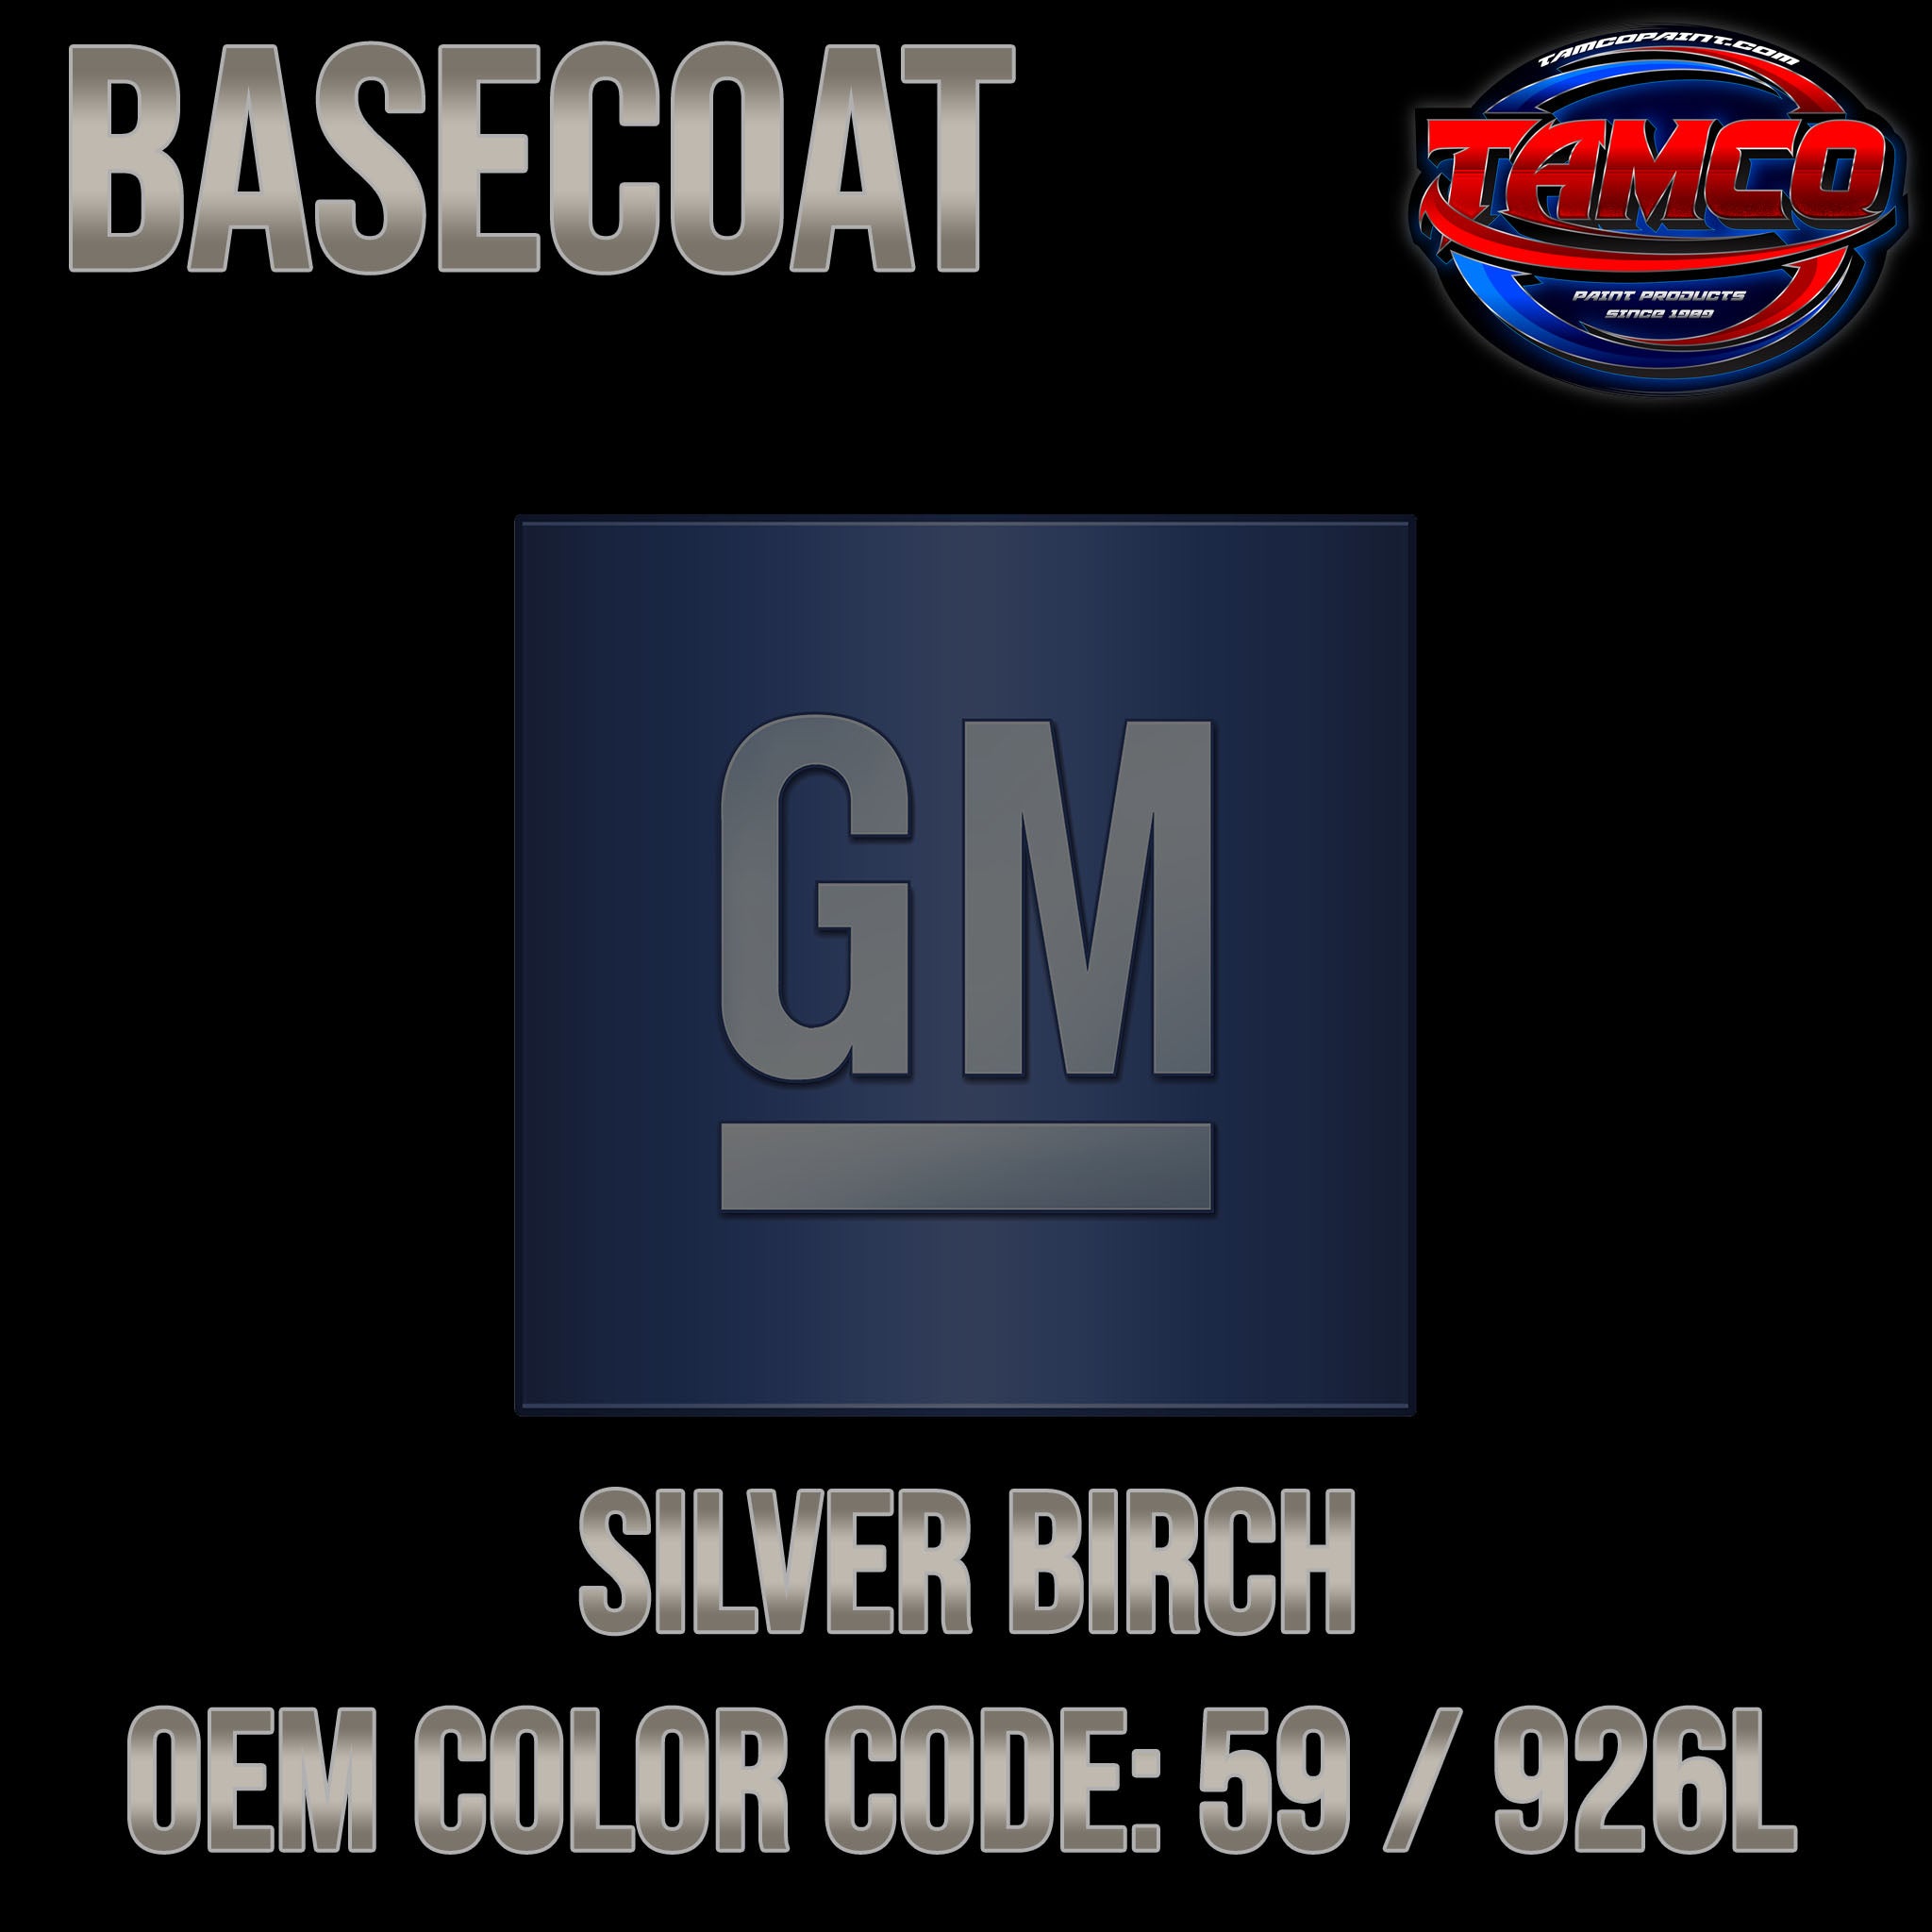 Heavy Metal Silver Metallic Basecoat Quart (Basecoat Only) Kit - Fast